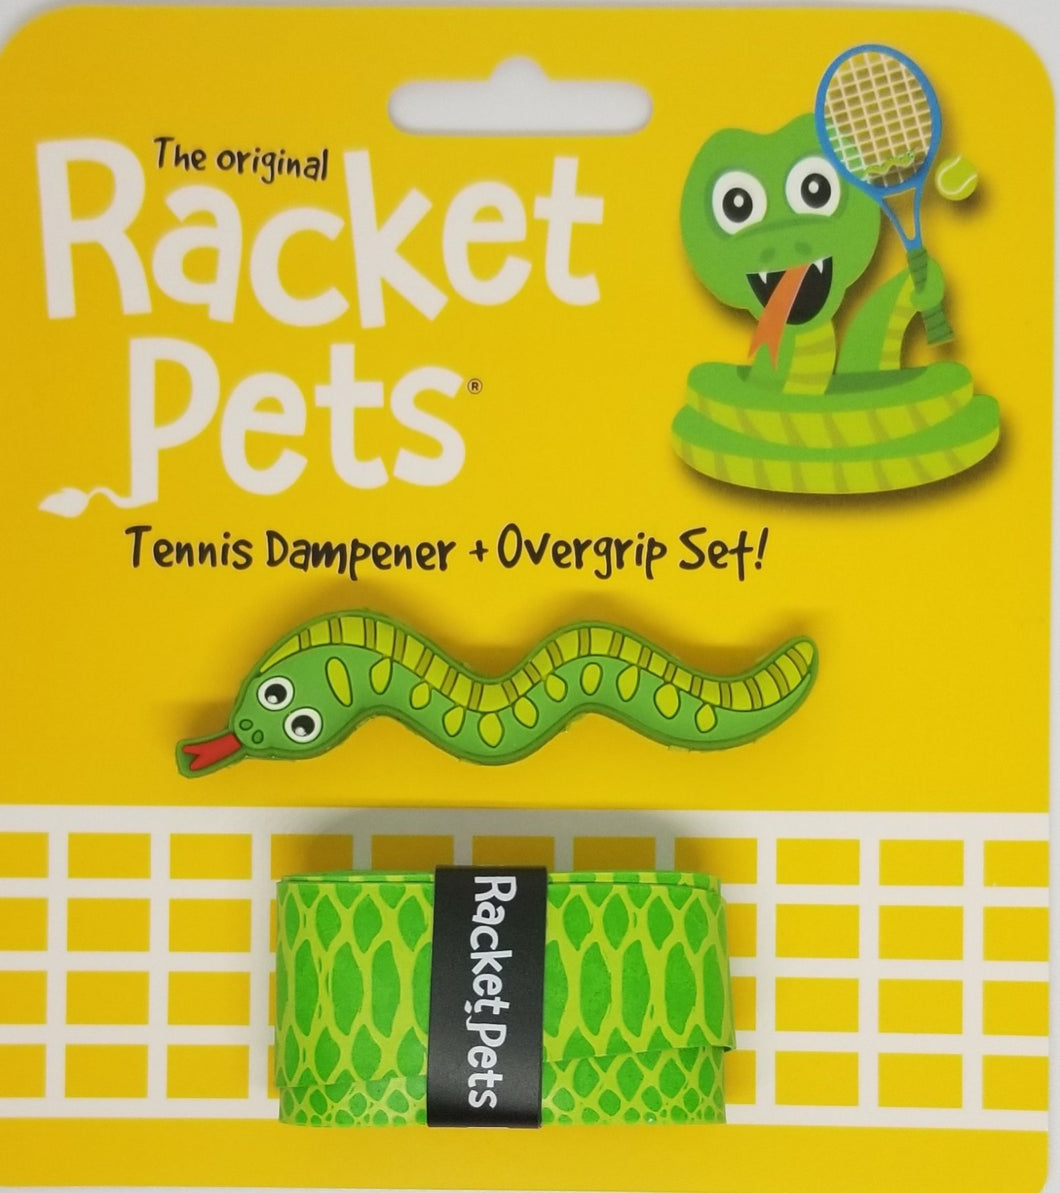 Green Snake - tennis racket dampener shock absorber overgrip animals